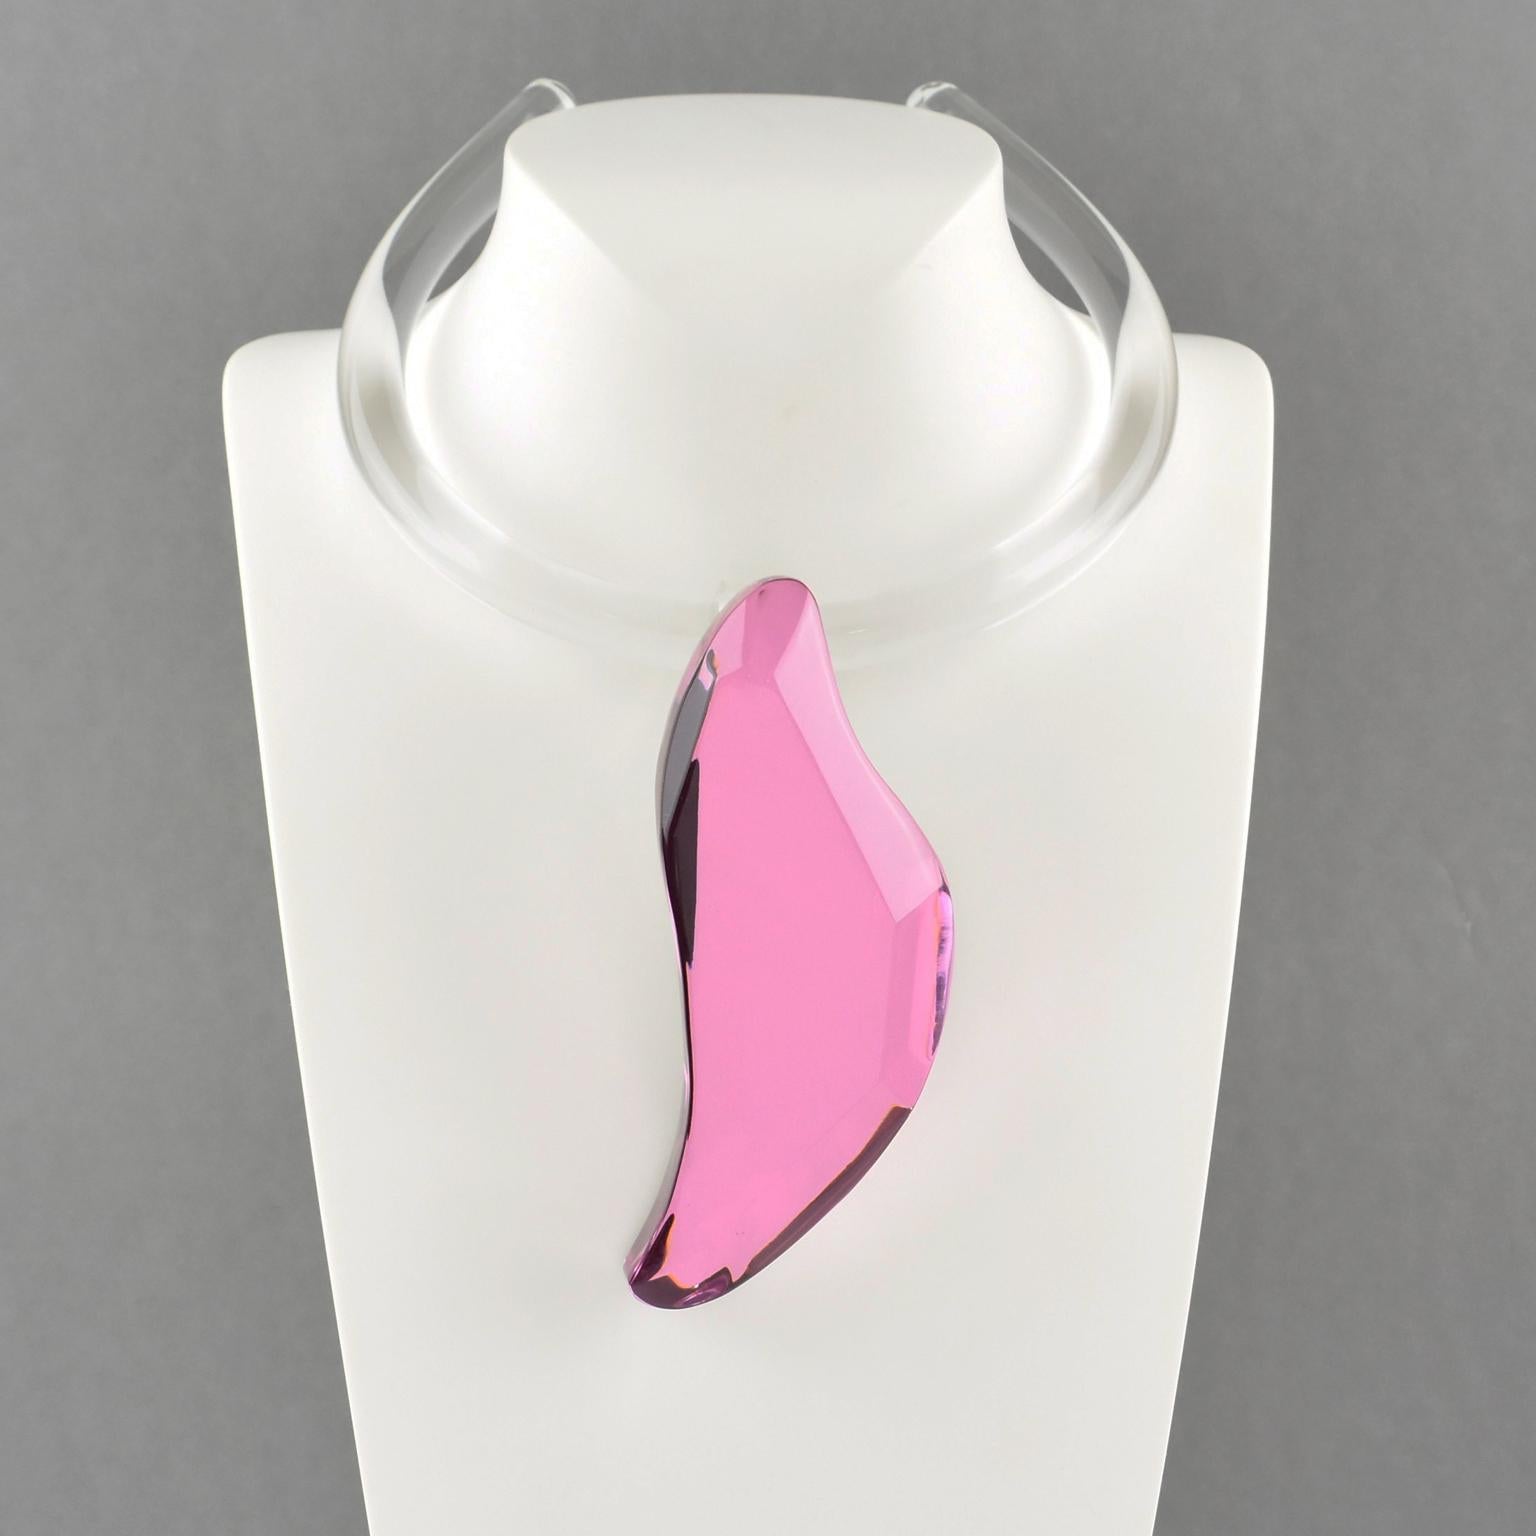 Kaso Sculptural Pink Lucite Rigid Choker Pendant Necklace In Excellent Condition For Sale In Atlanta, GA